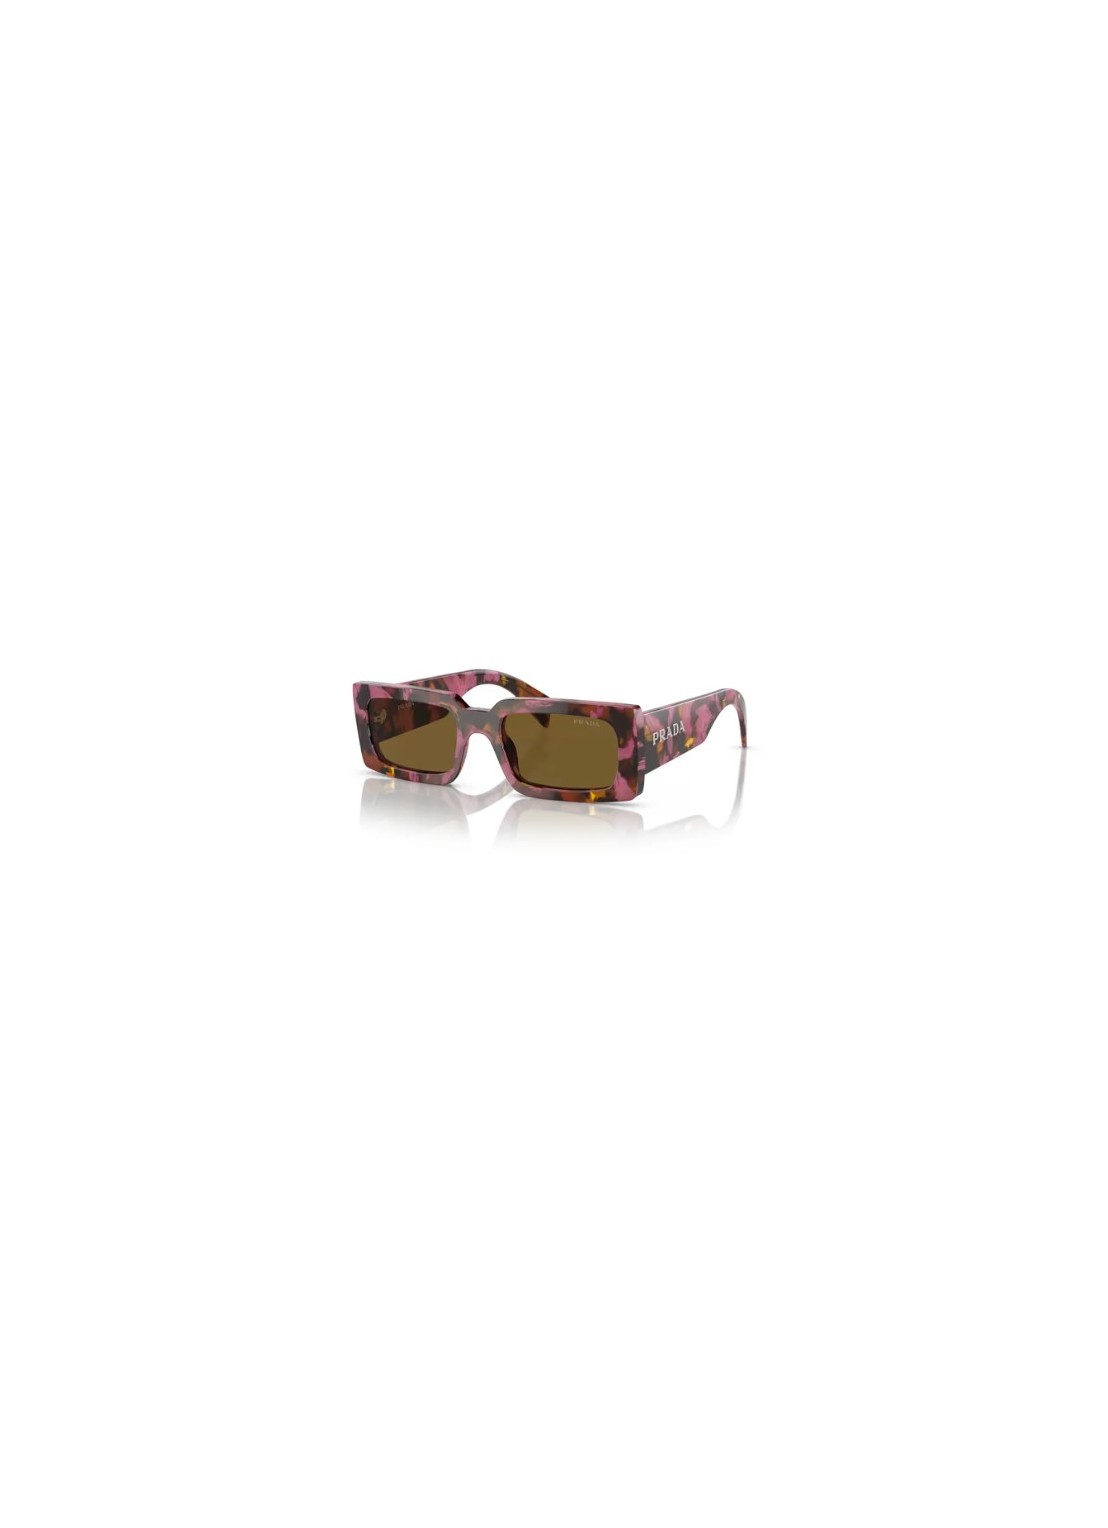 Gafas prada sunglasses woman 0pra07s 0pra07s 18n01t talla transparente
 